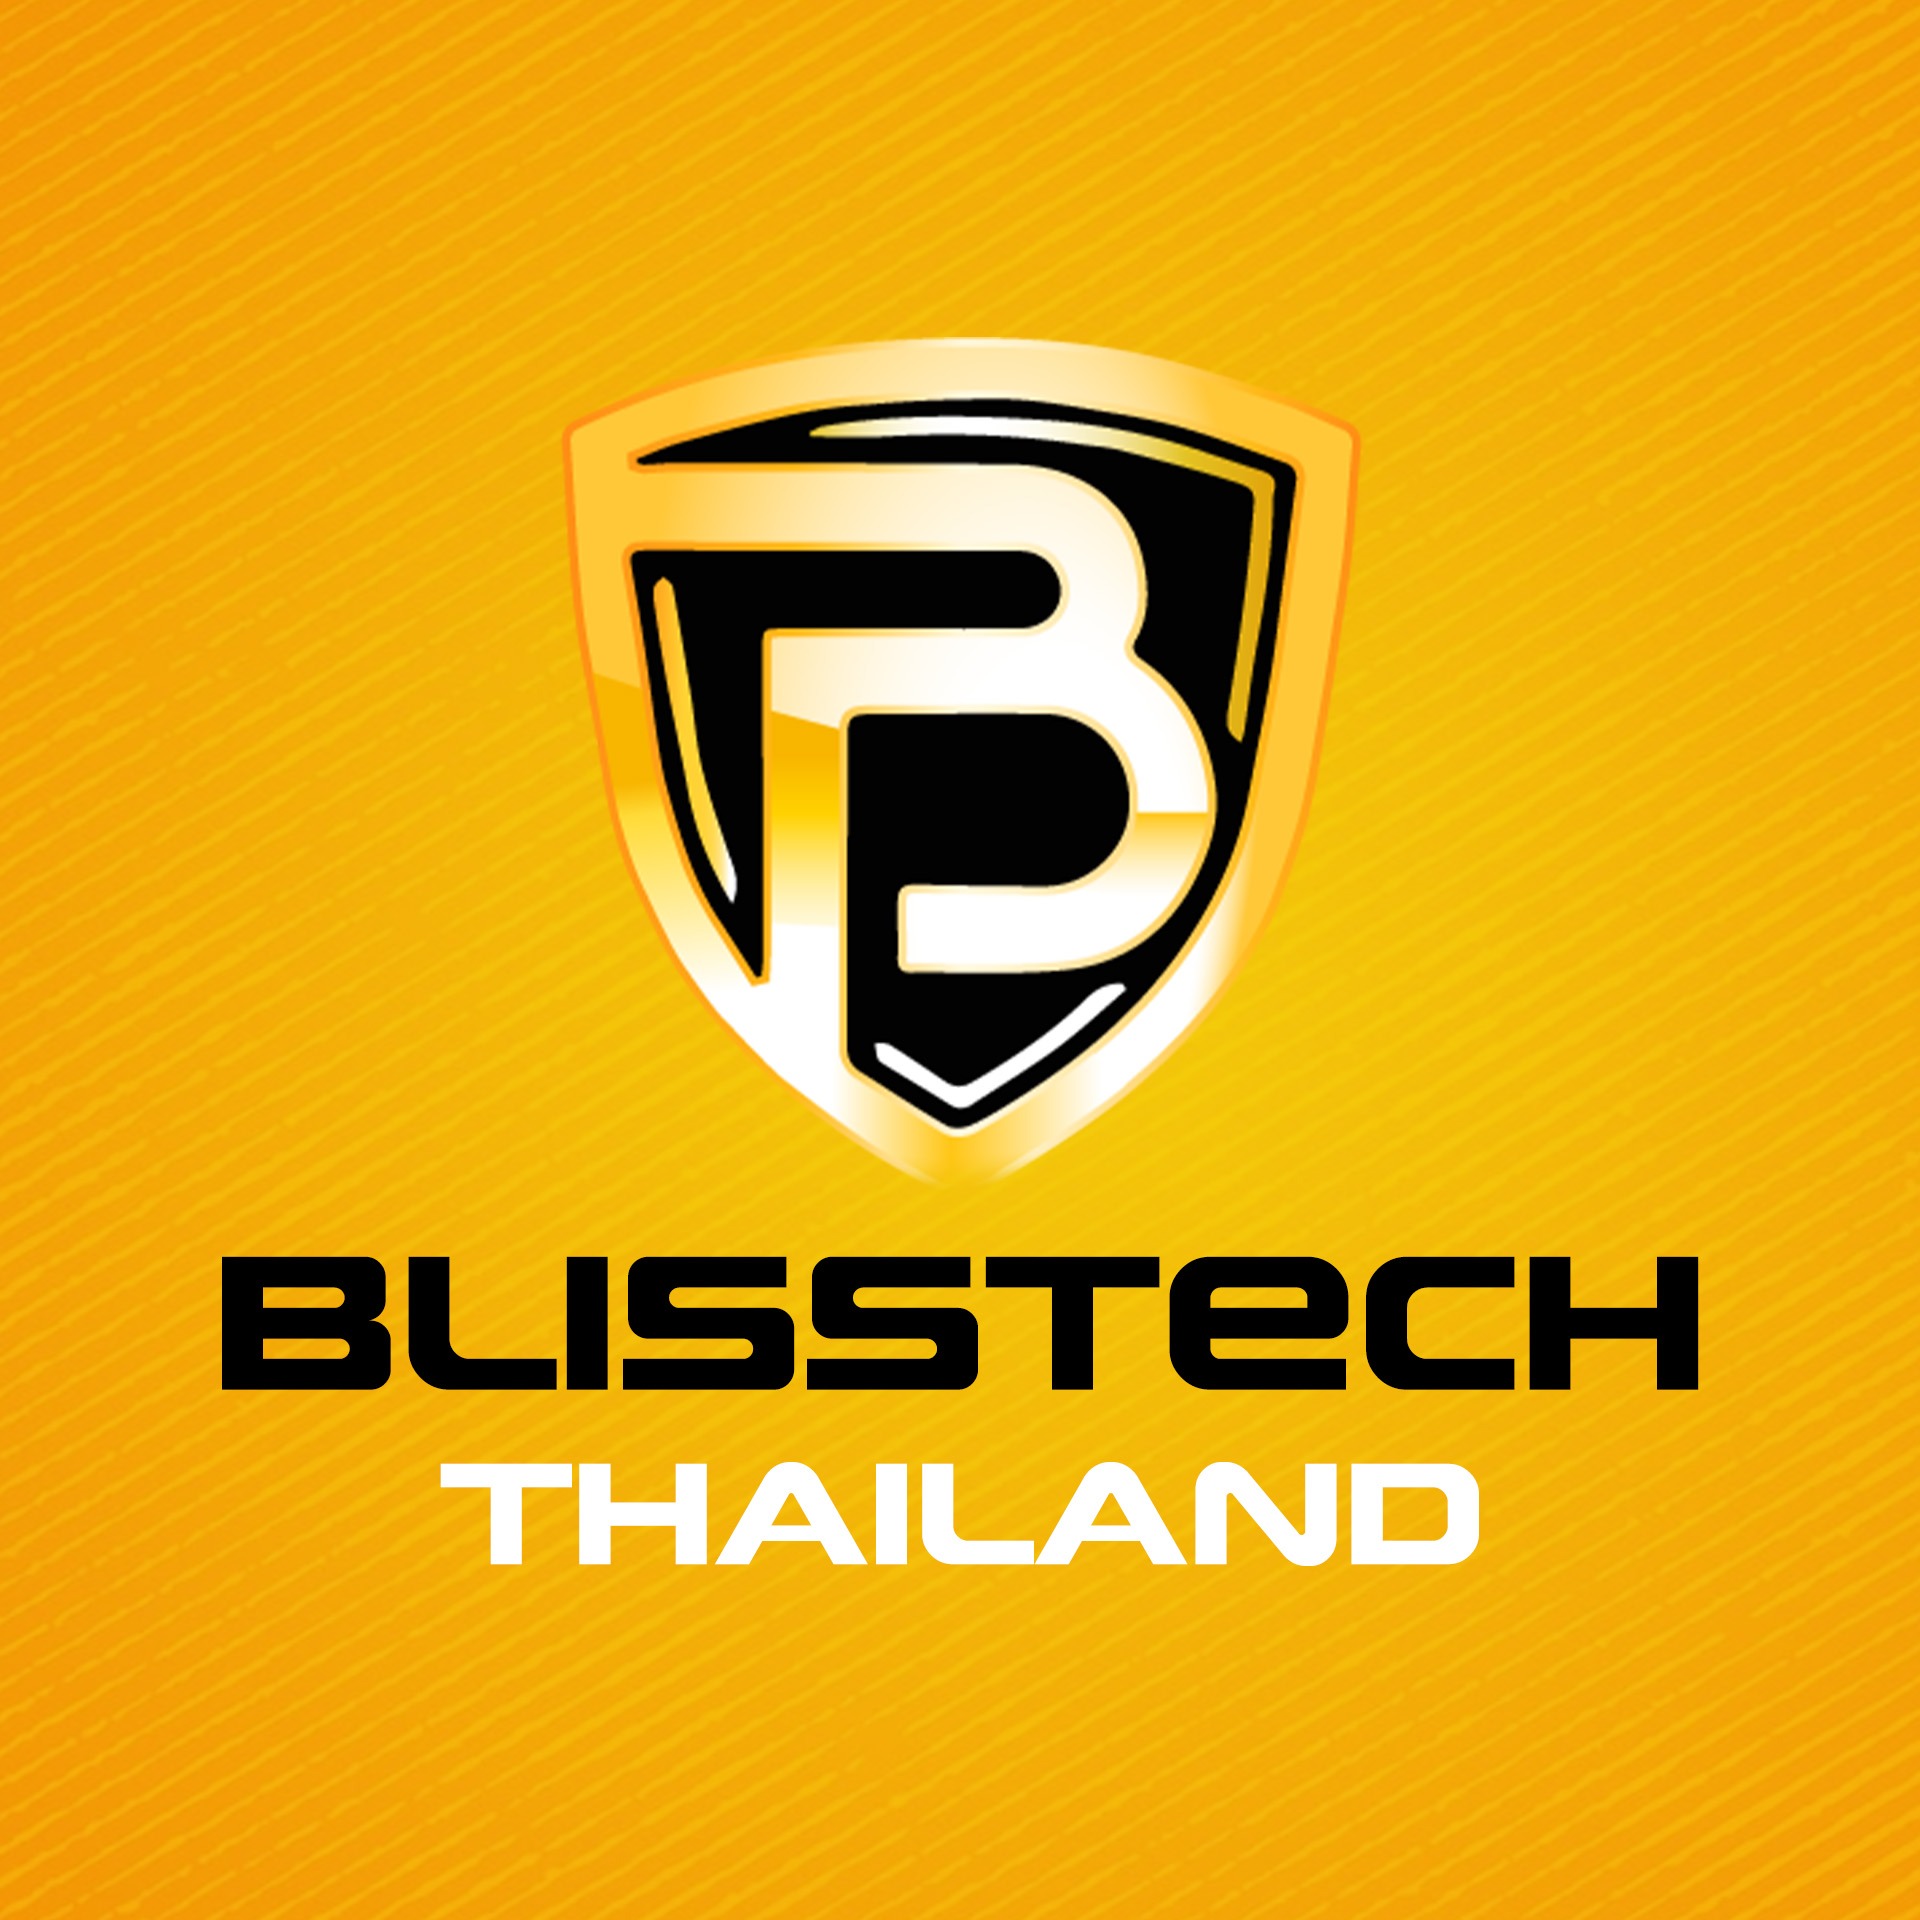 Ready go to ... https://shopee.co.th/blisstech_thailand [ BLISSTECH THAILAND, ร้านค้าออนไลน์ | Shopee Thailand]